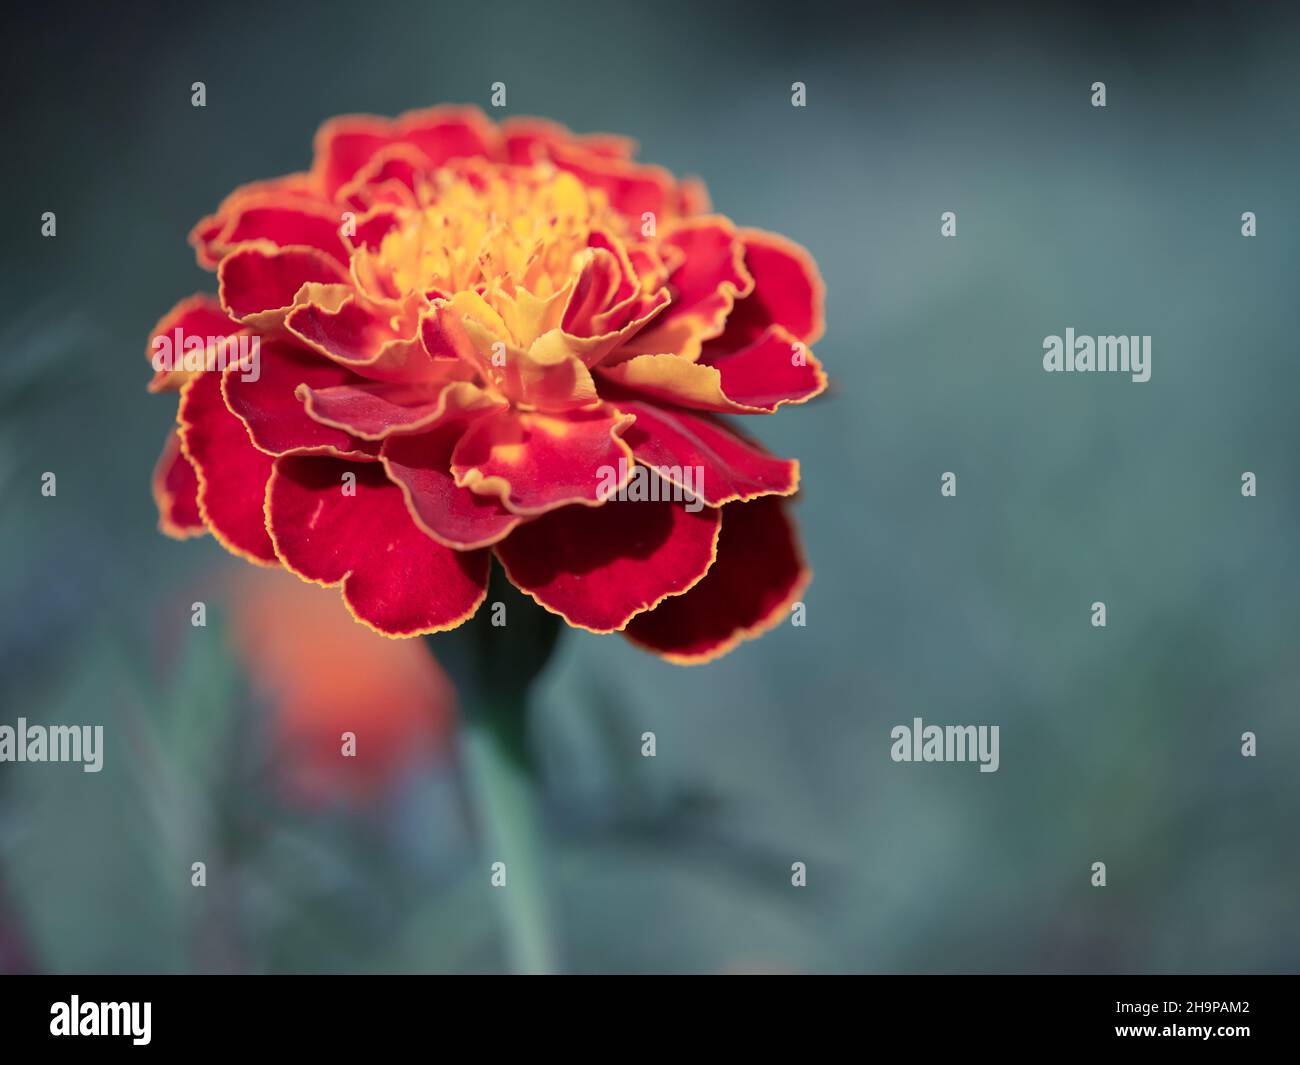 Marigold flower on a blurry background, macro photo. Stock Photo